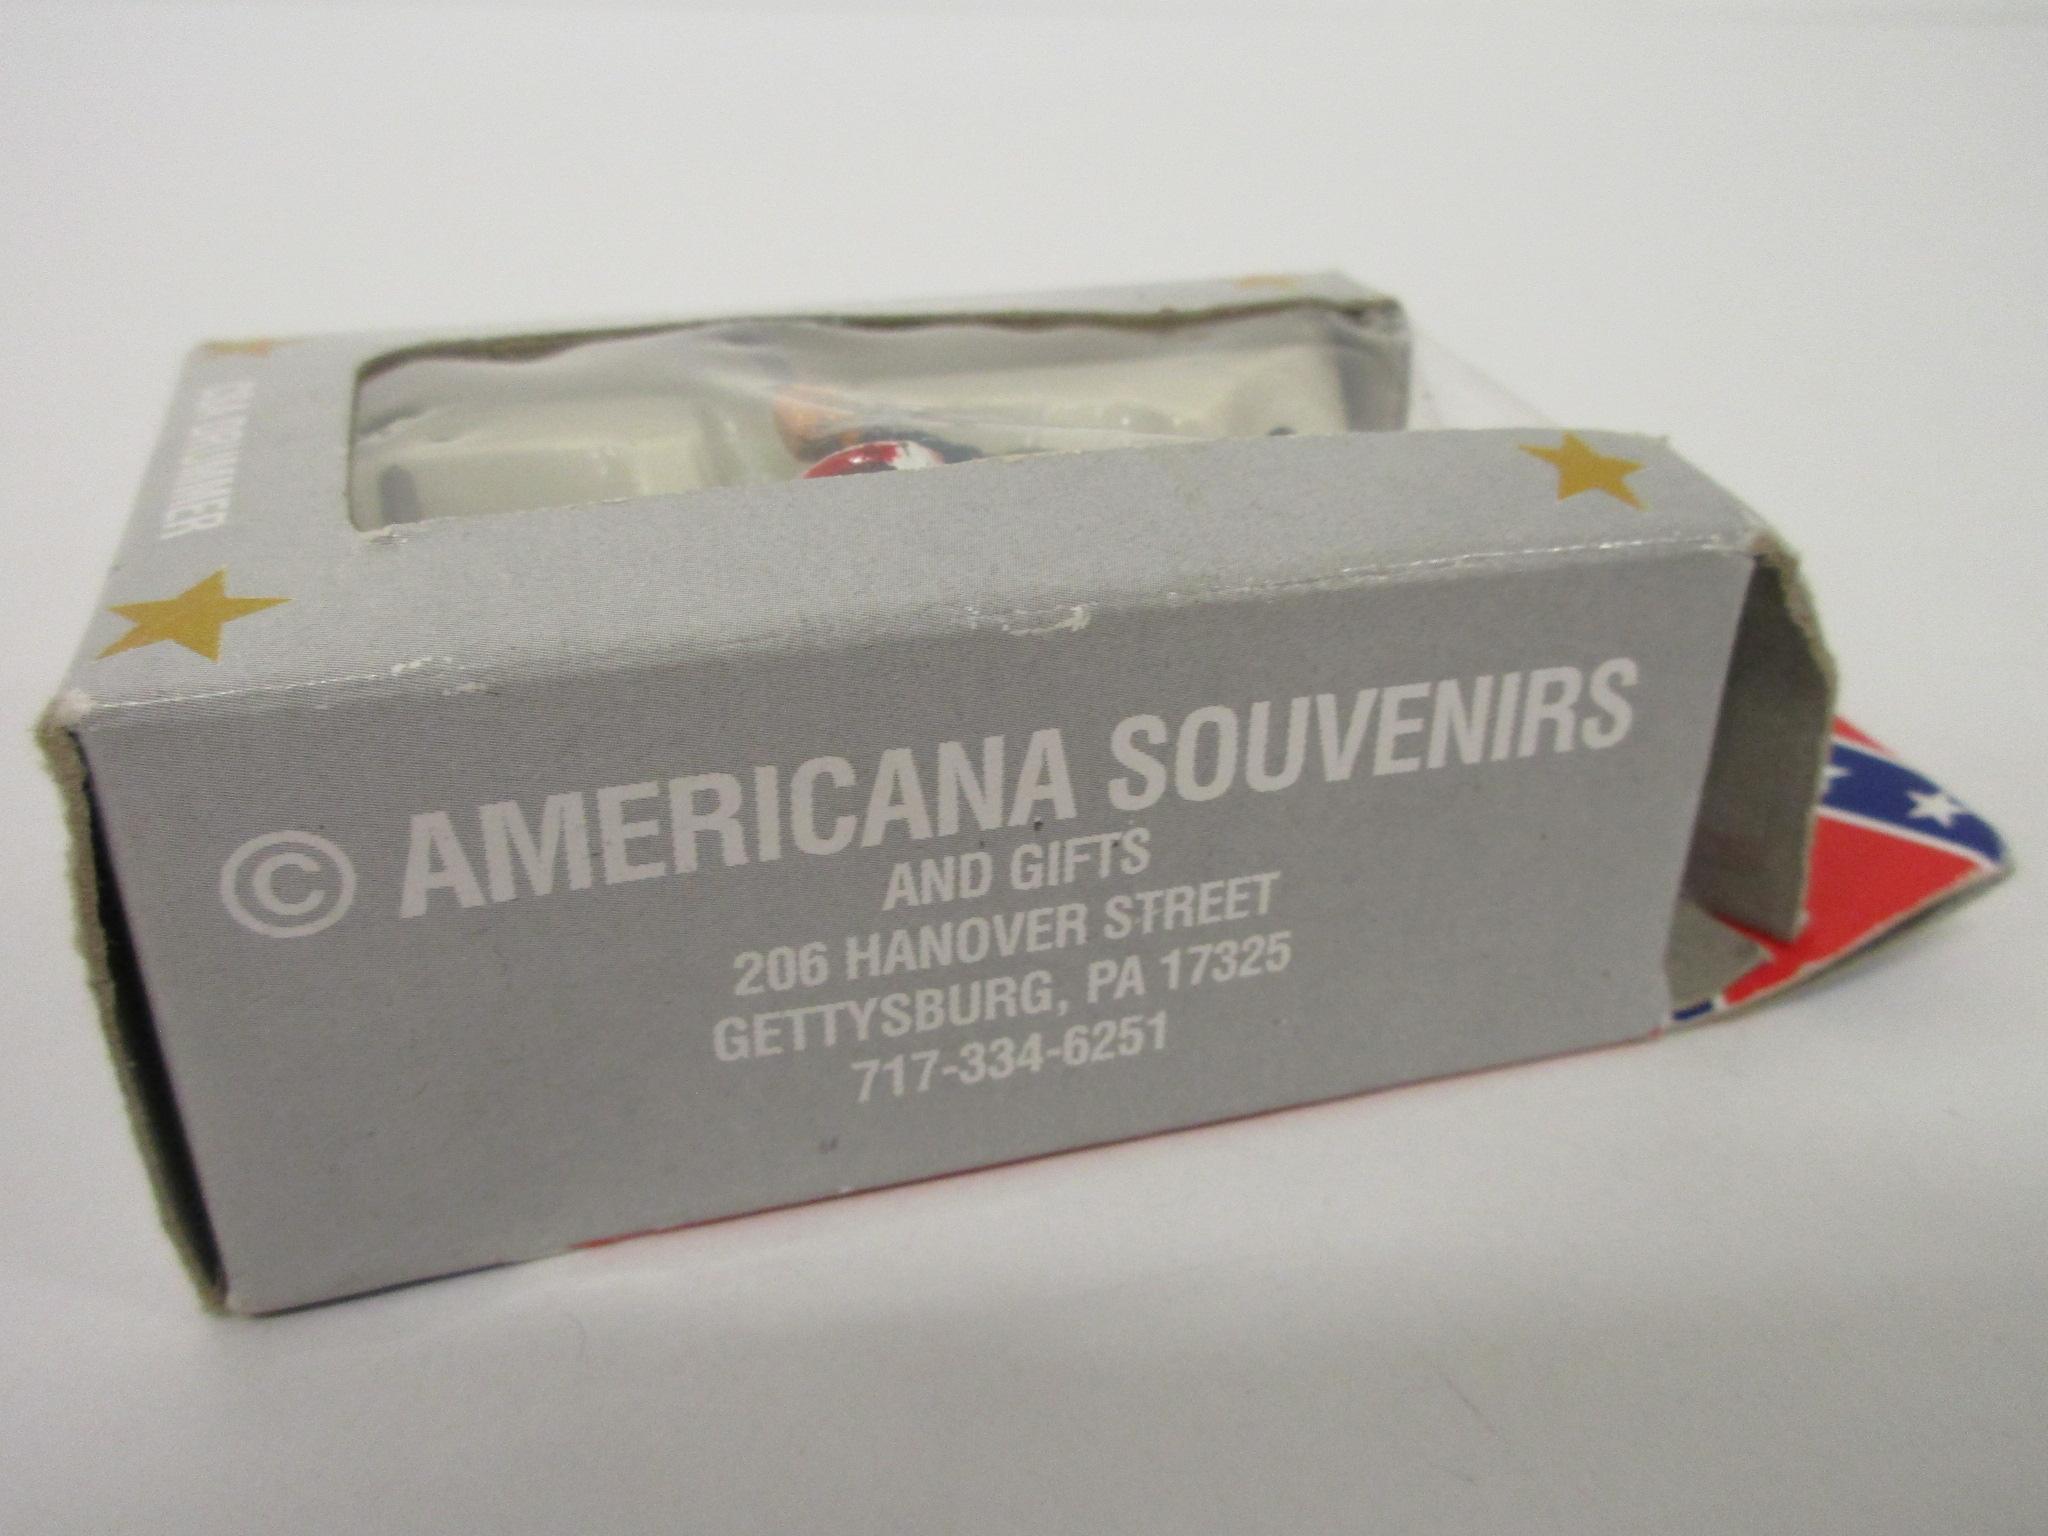 Civil War Miniature Soldier CSA Drummer Americana Souvenirs and Gifts